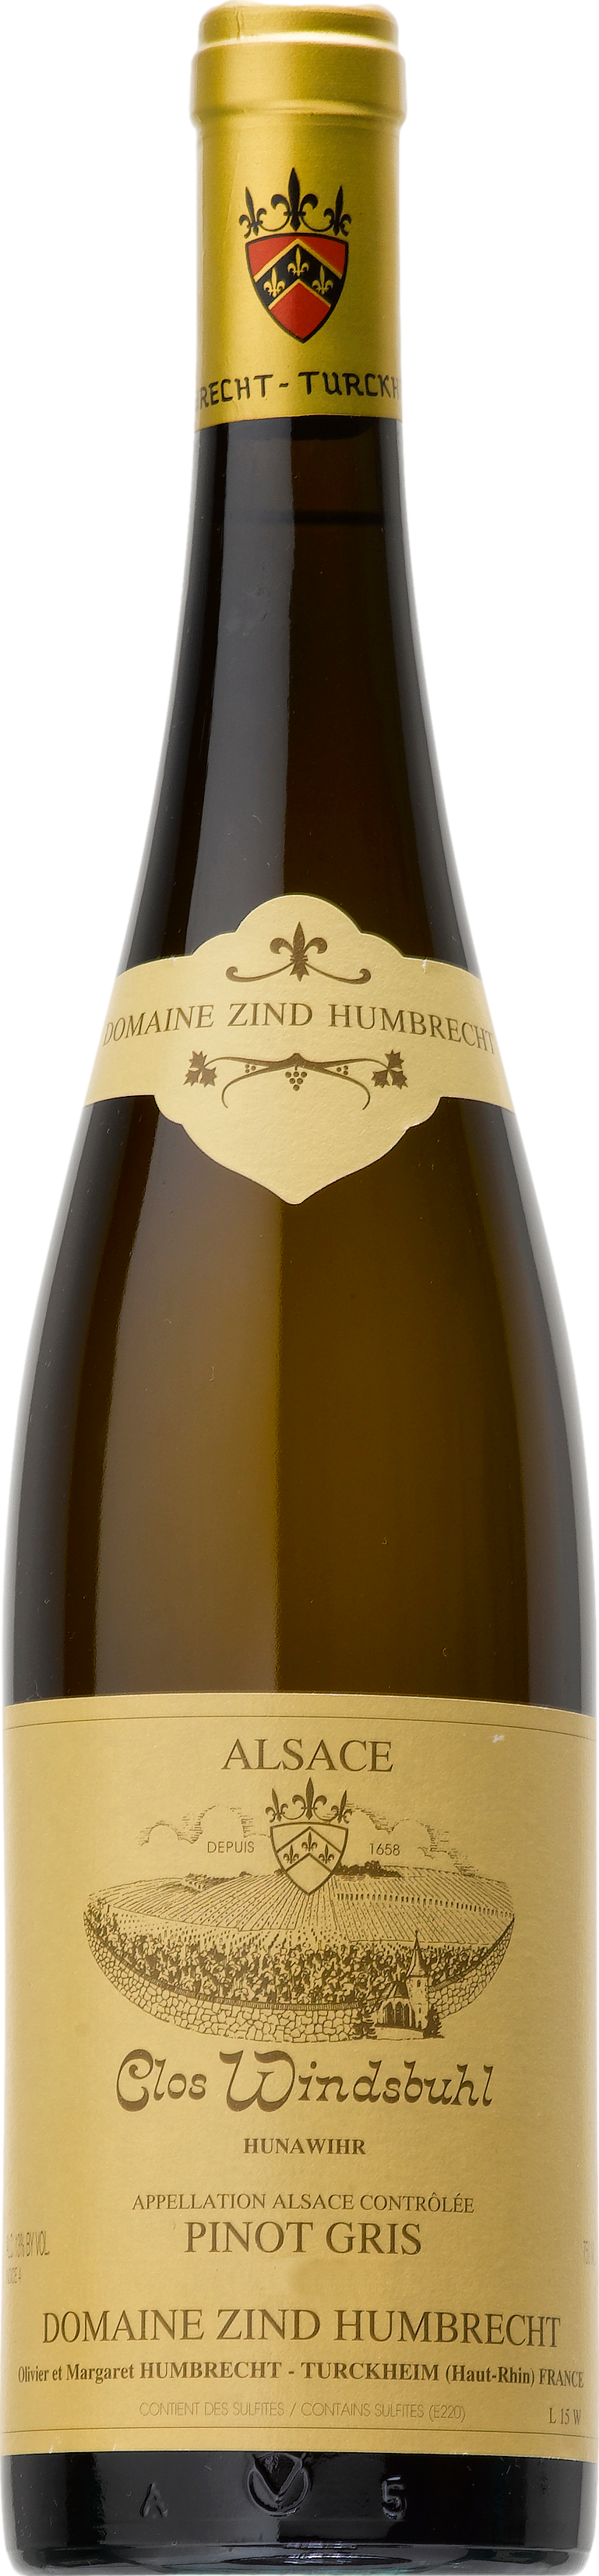 12/2015 günstig Kaufen-Domaine Zind-Humbrecht Pinot Gris Clos Windsbuhl 2015. Domaine Zind-Humbrecht Pinot Gris Clos Windsbuhl 2015 . 